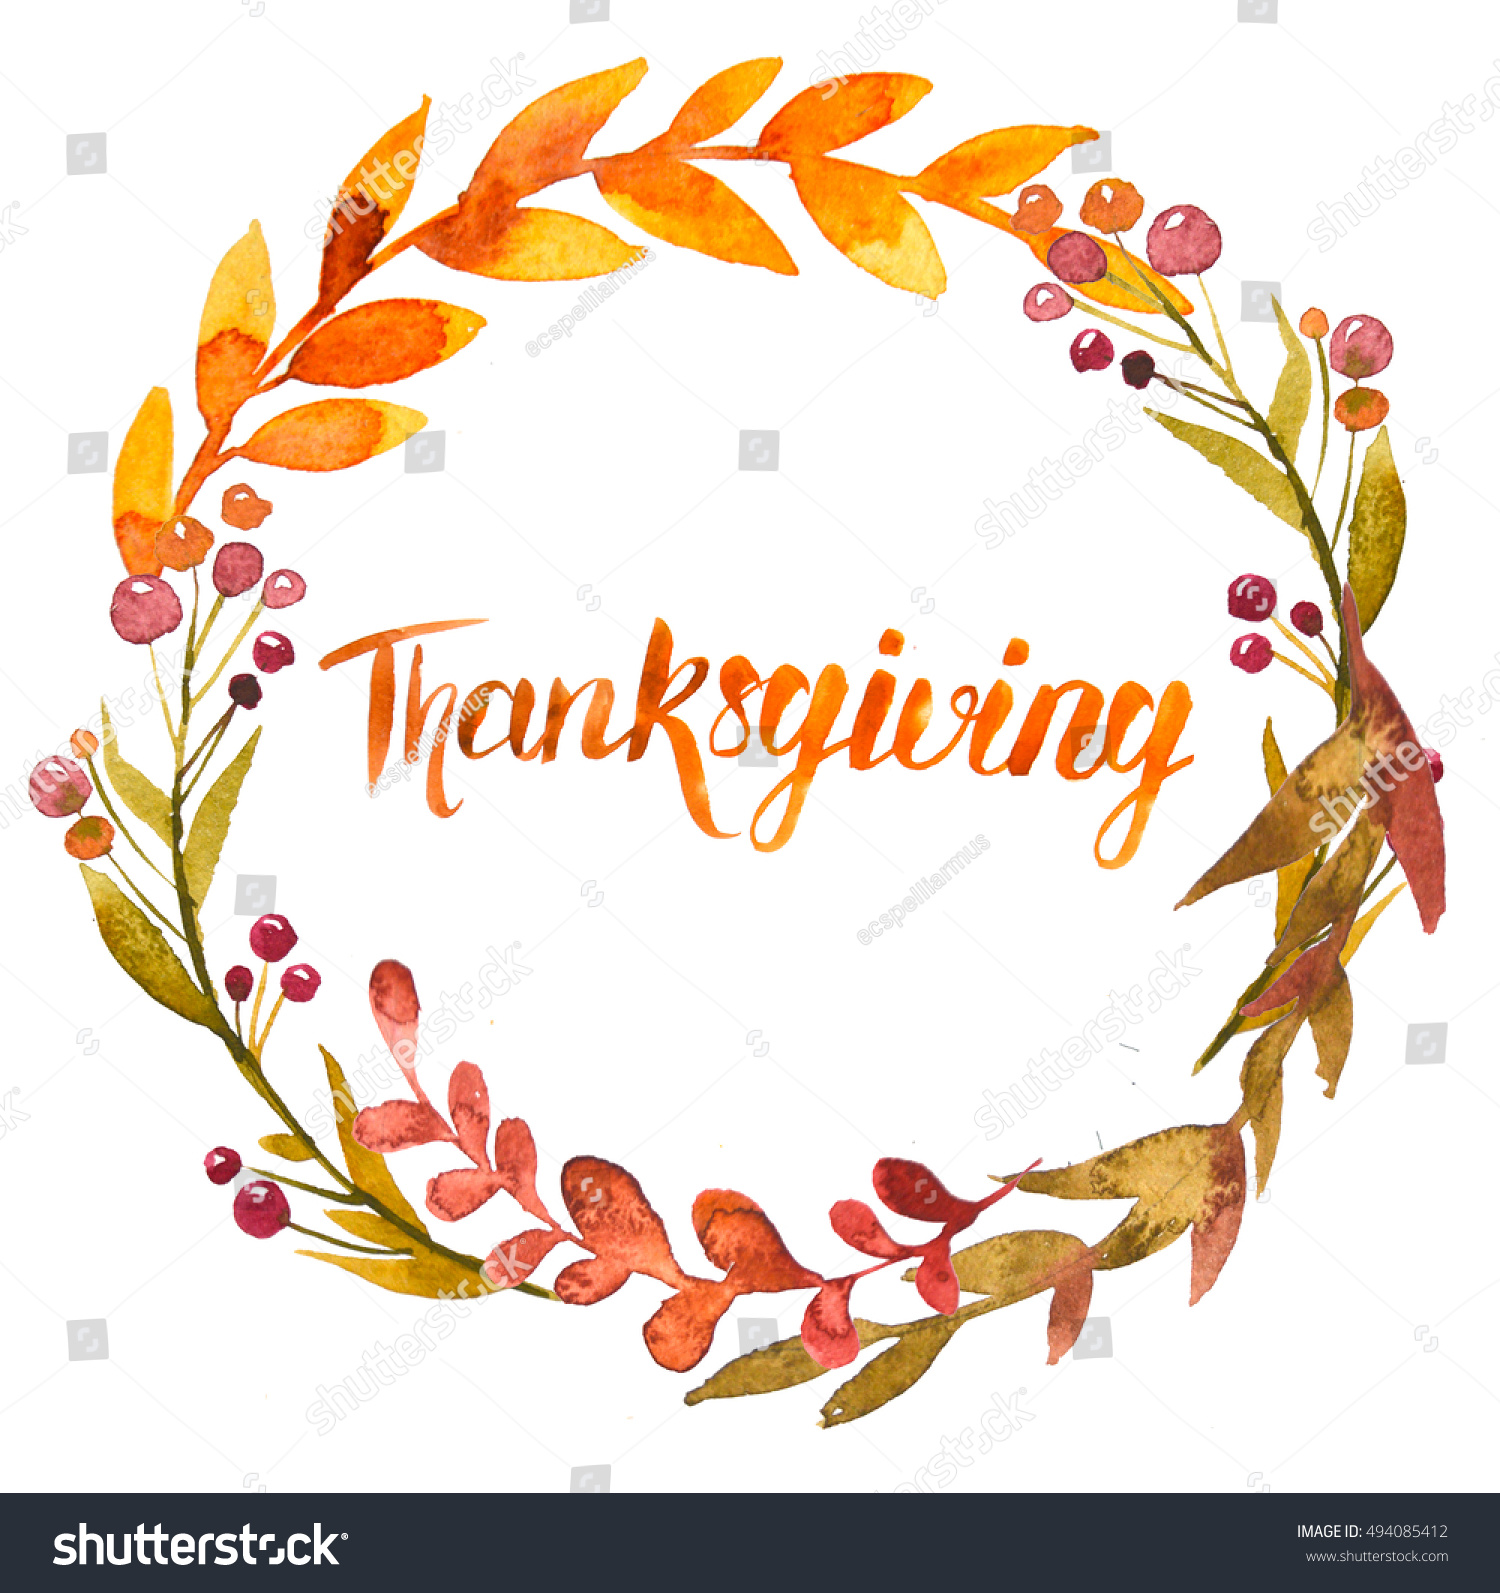 Thanksgiving Watercolor Illustration Wreath Garland Circle Stock ...